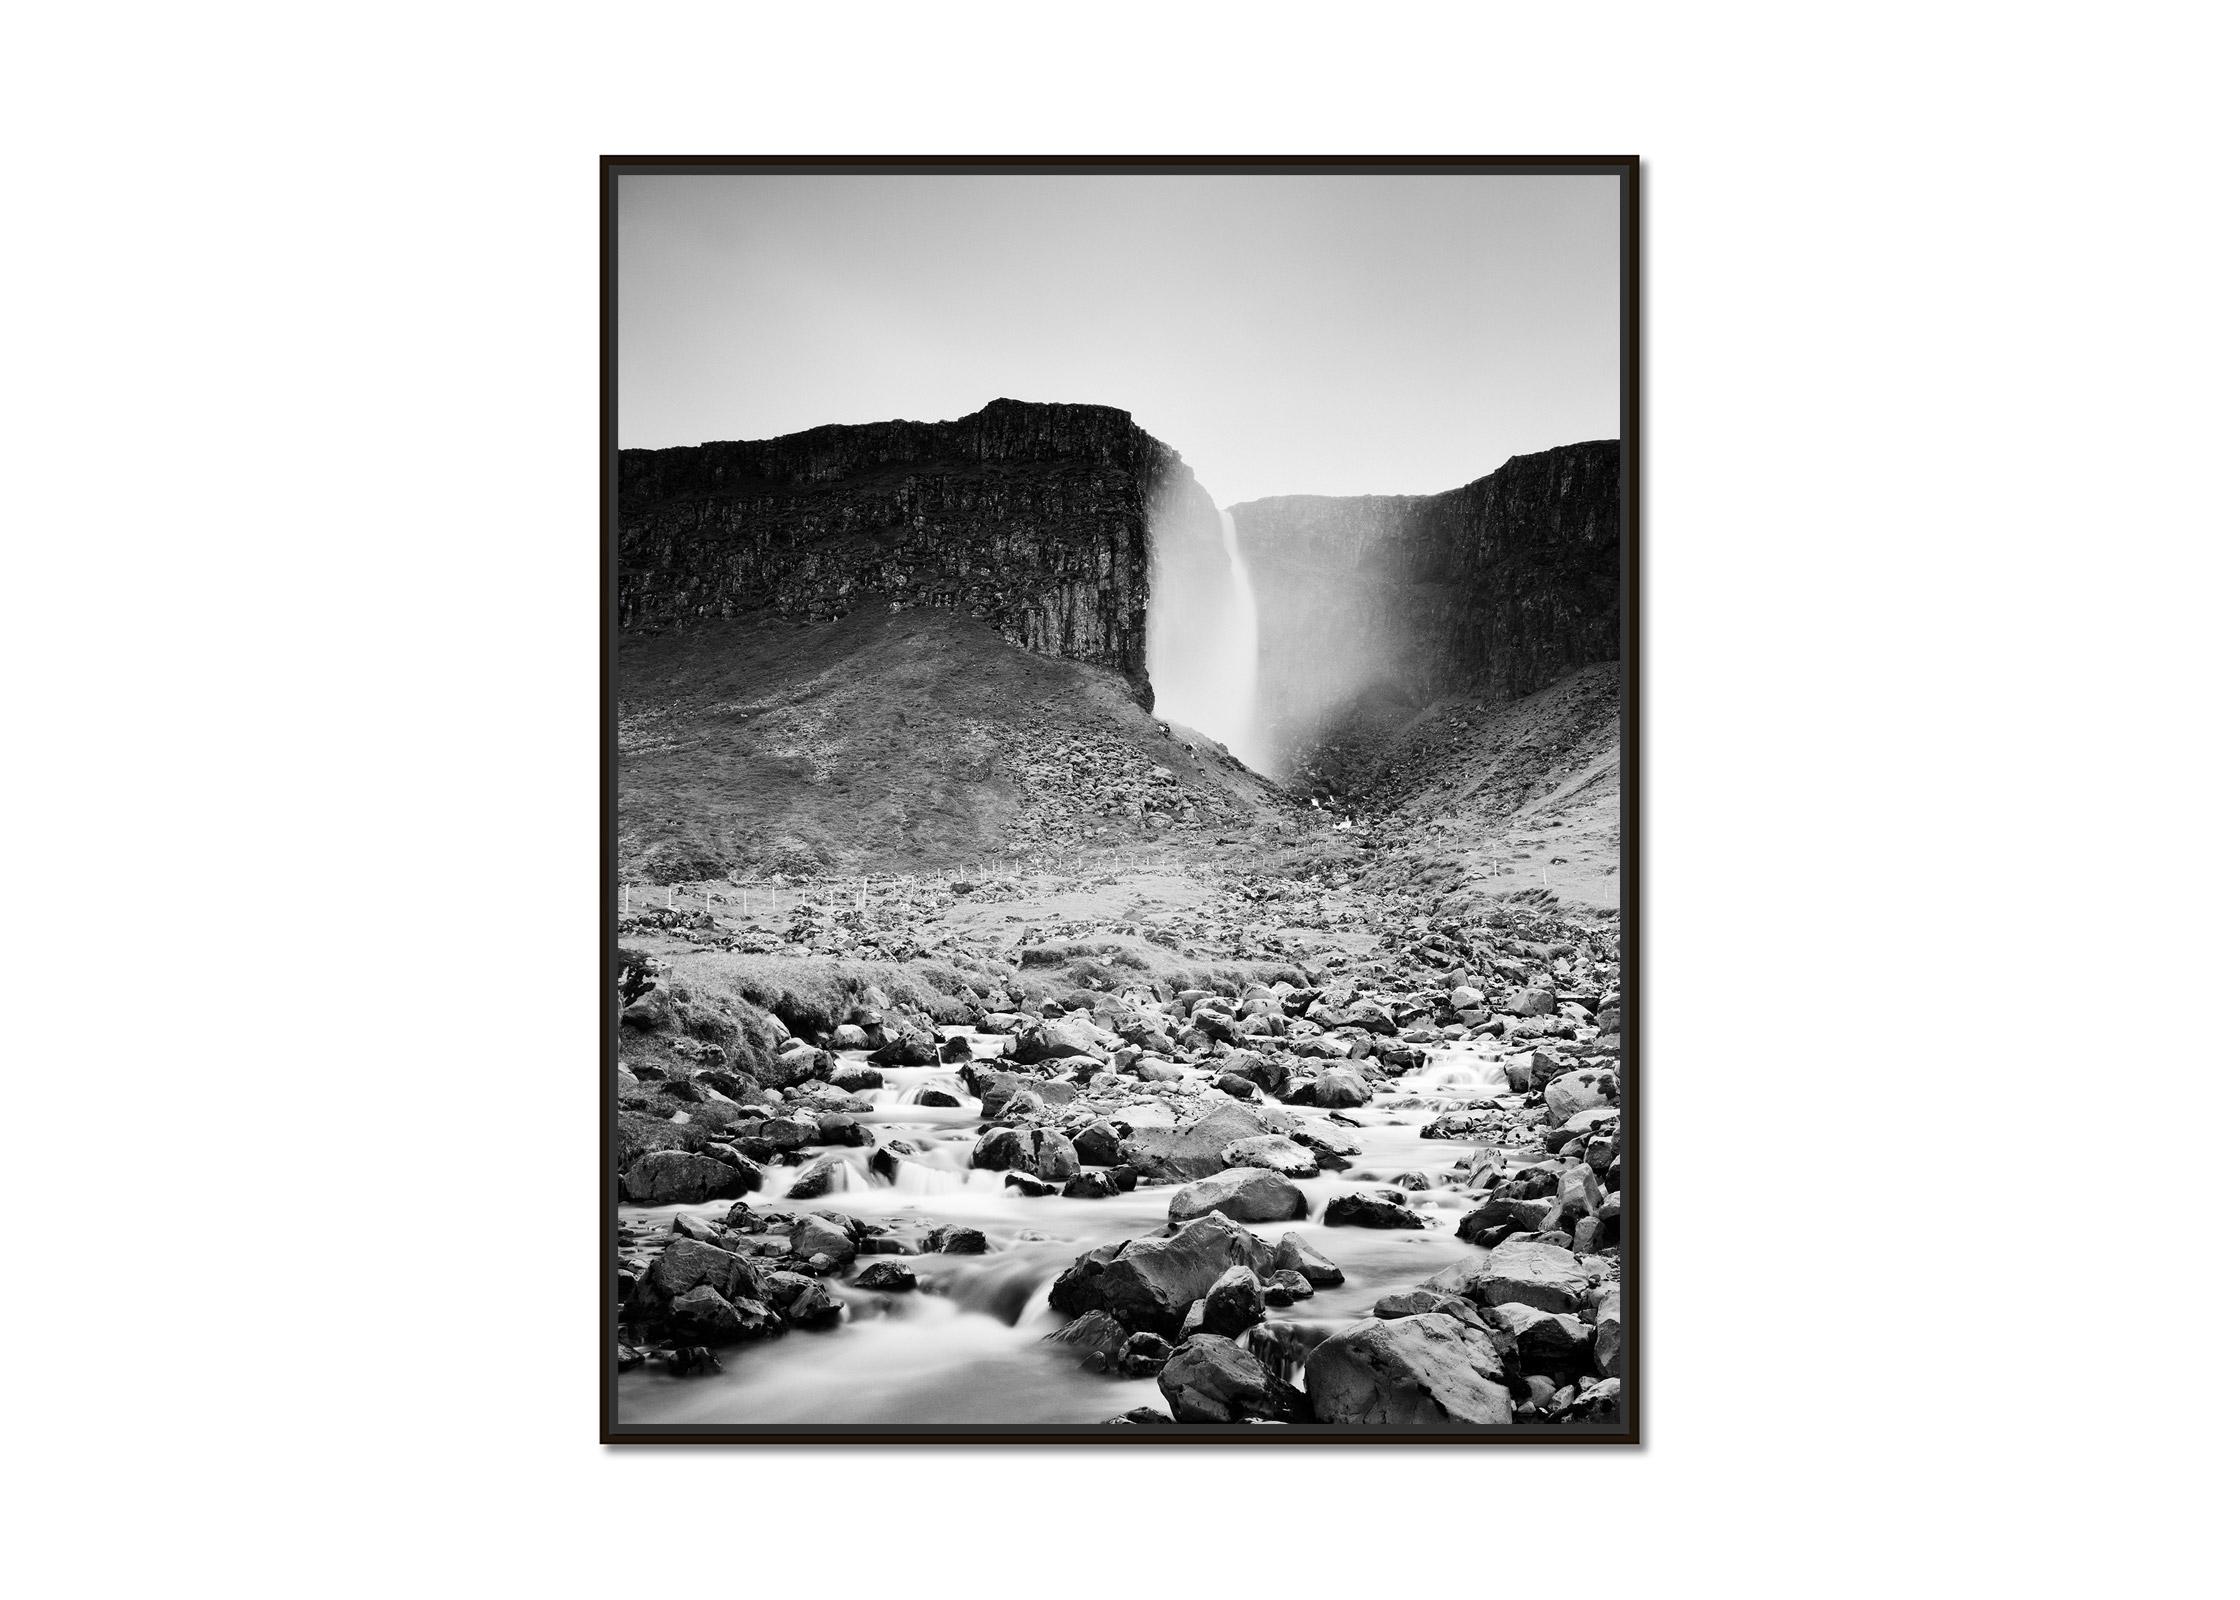 Foss, Wasserfall, Gebirgsbach, Island, s/w-Fotografie, Landschaften (Zeitgenössisch), Photograph, von Gerald Berghammer